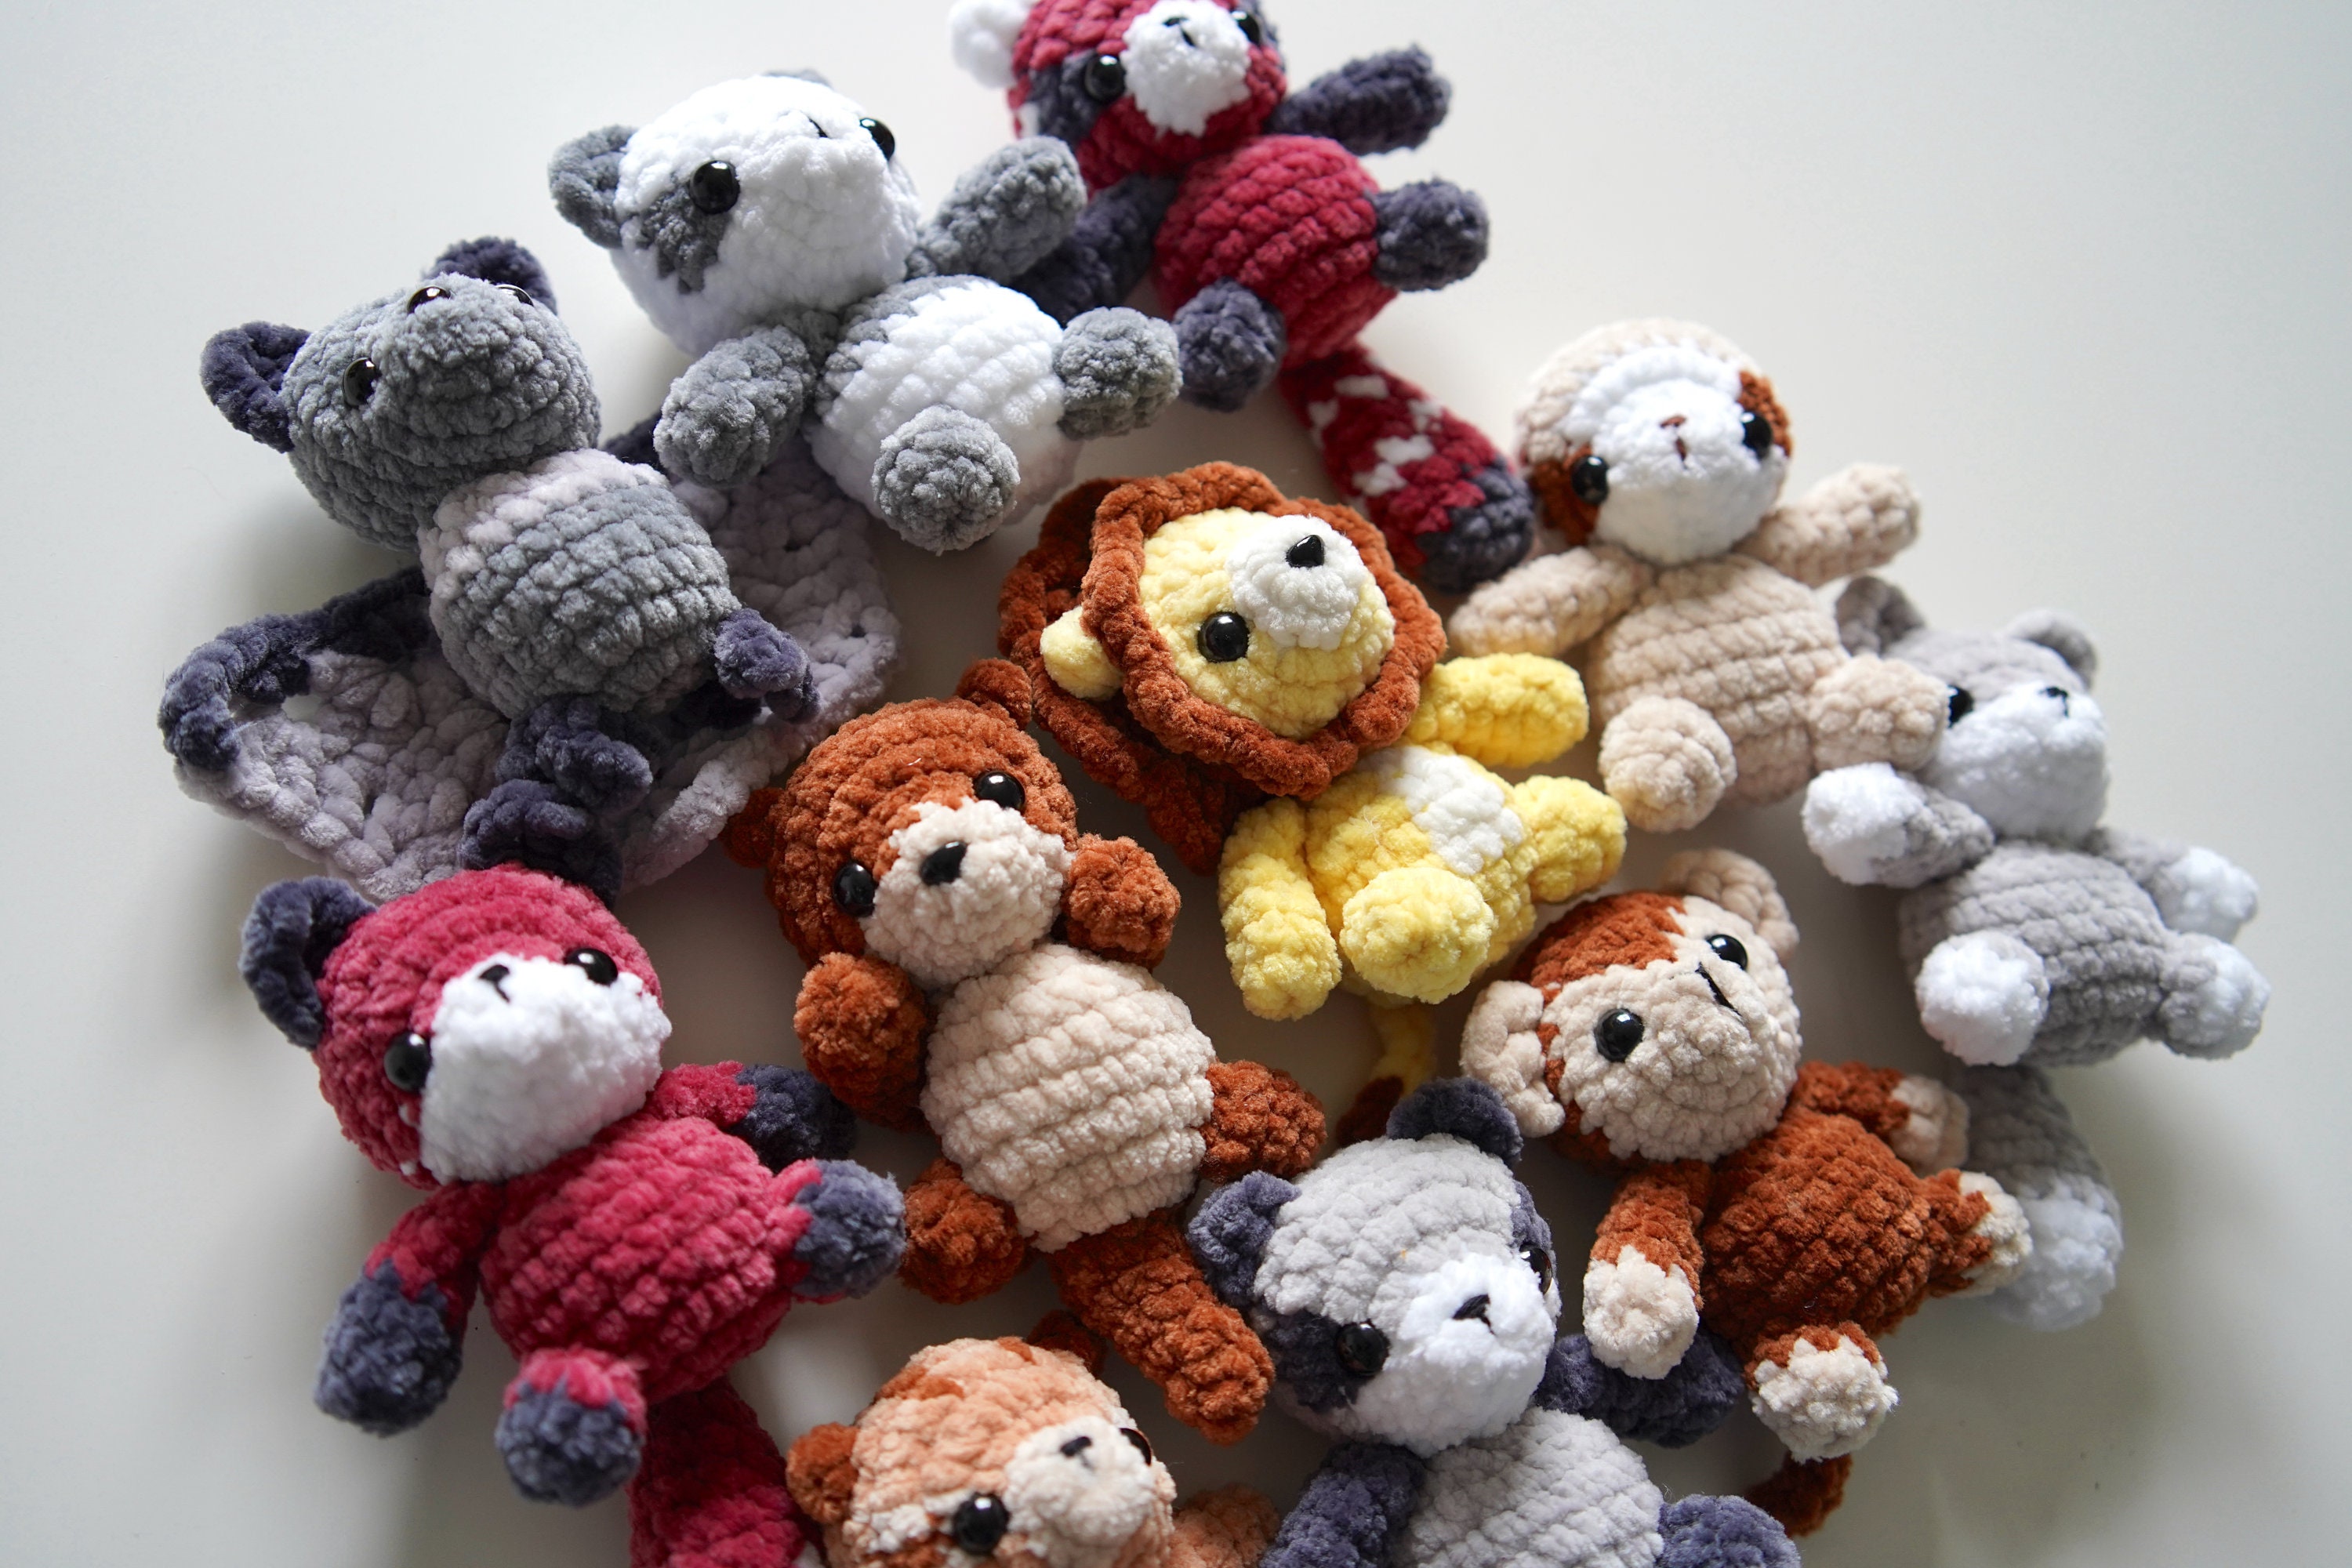 Amigurumi Crochet Yarn Set 40x Multicolor XL Packs 100% Cotton 40x20g  Assorted Colors Extra Large 800g Bundle FREE Project Bag 